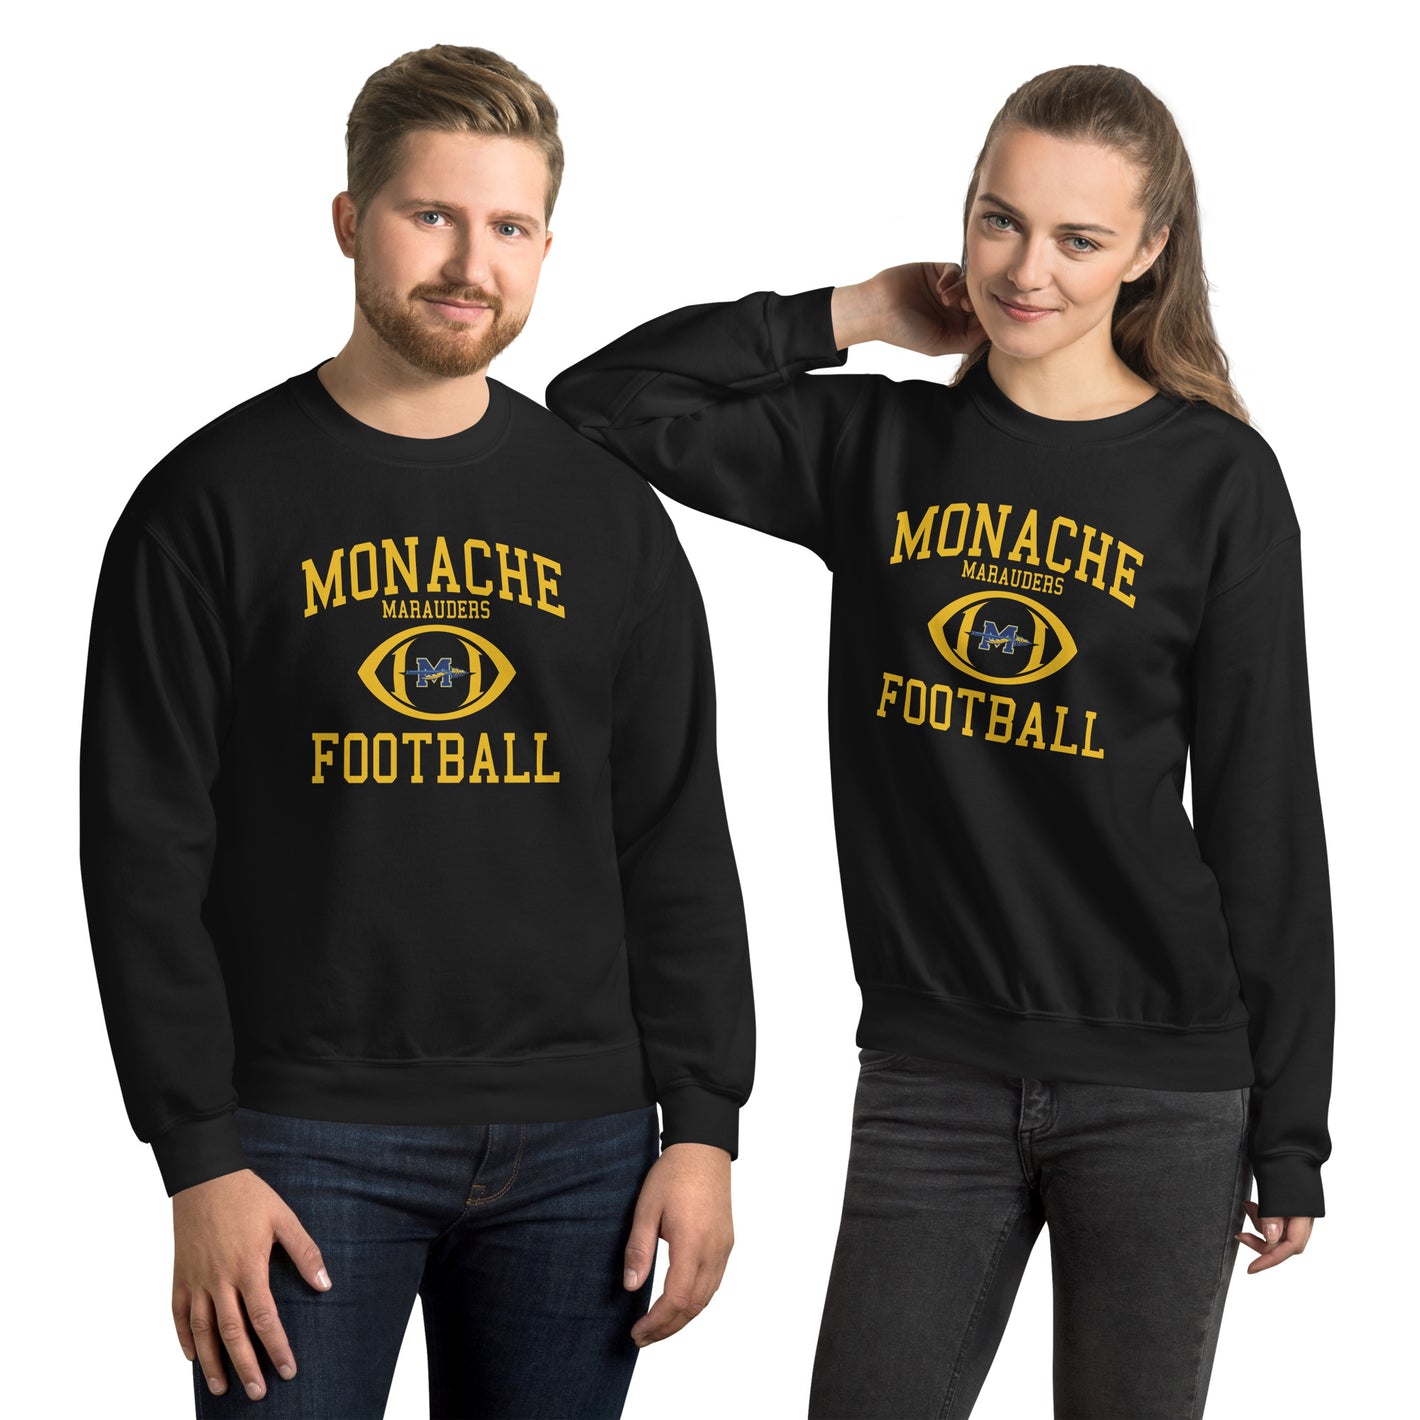 Best Monache High School Sweater